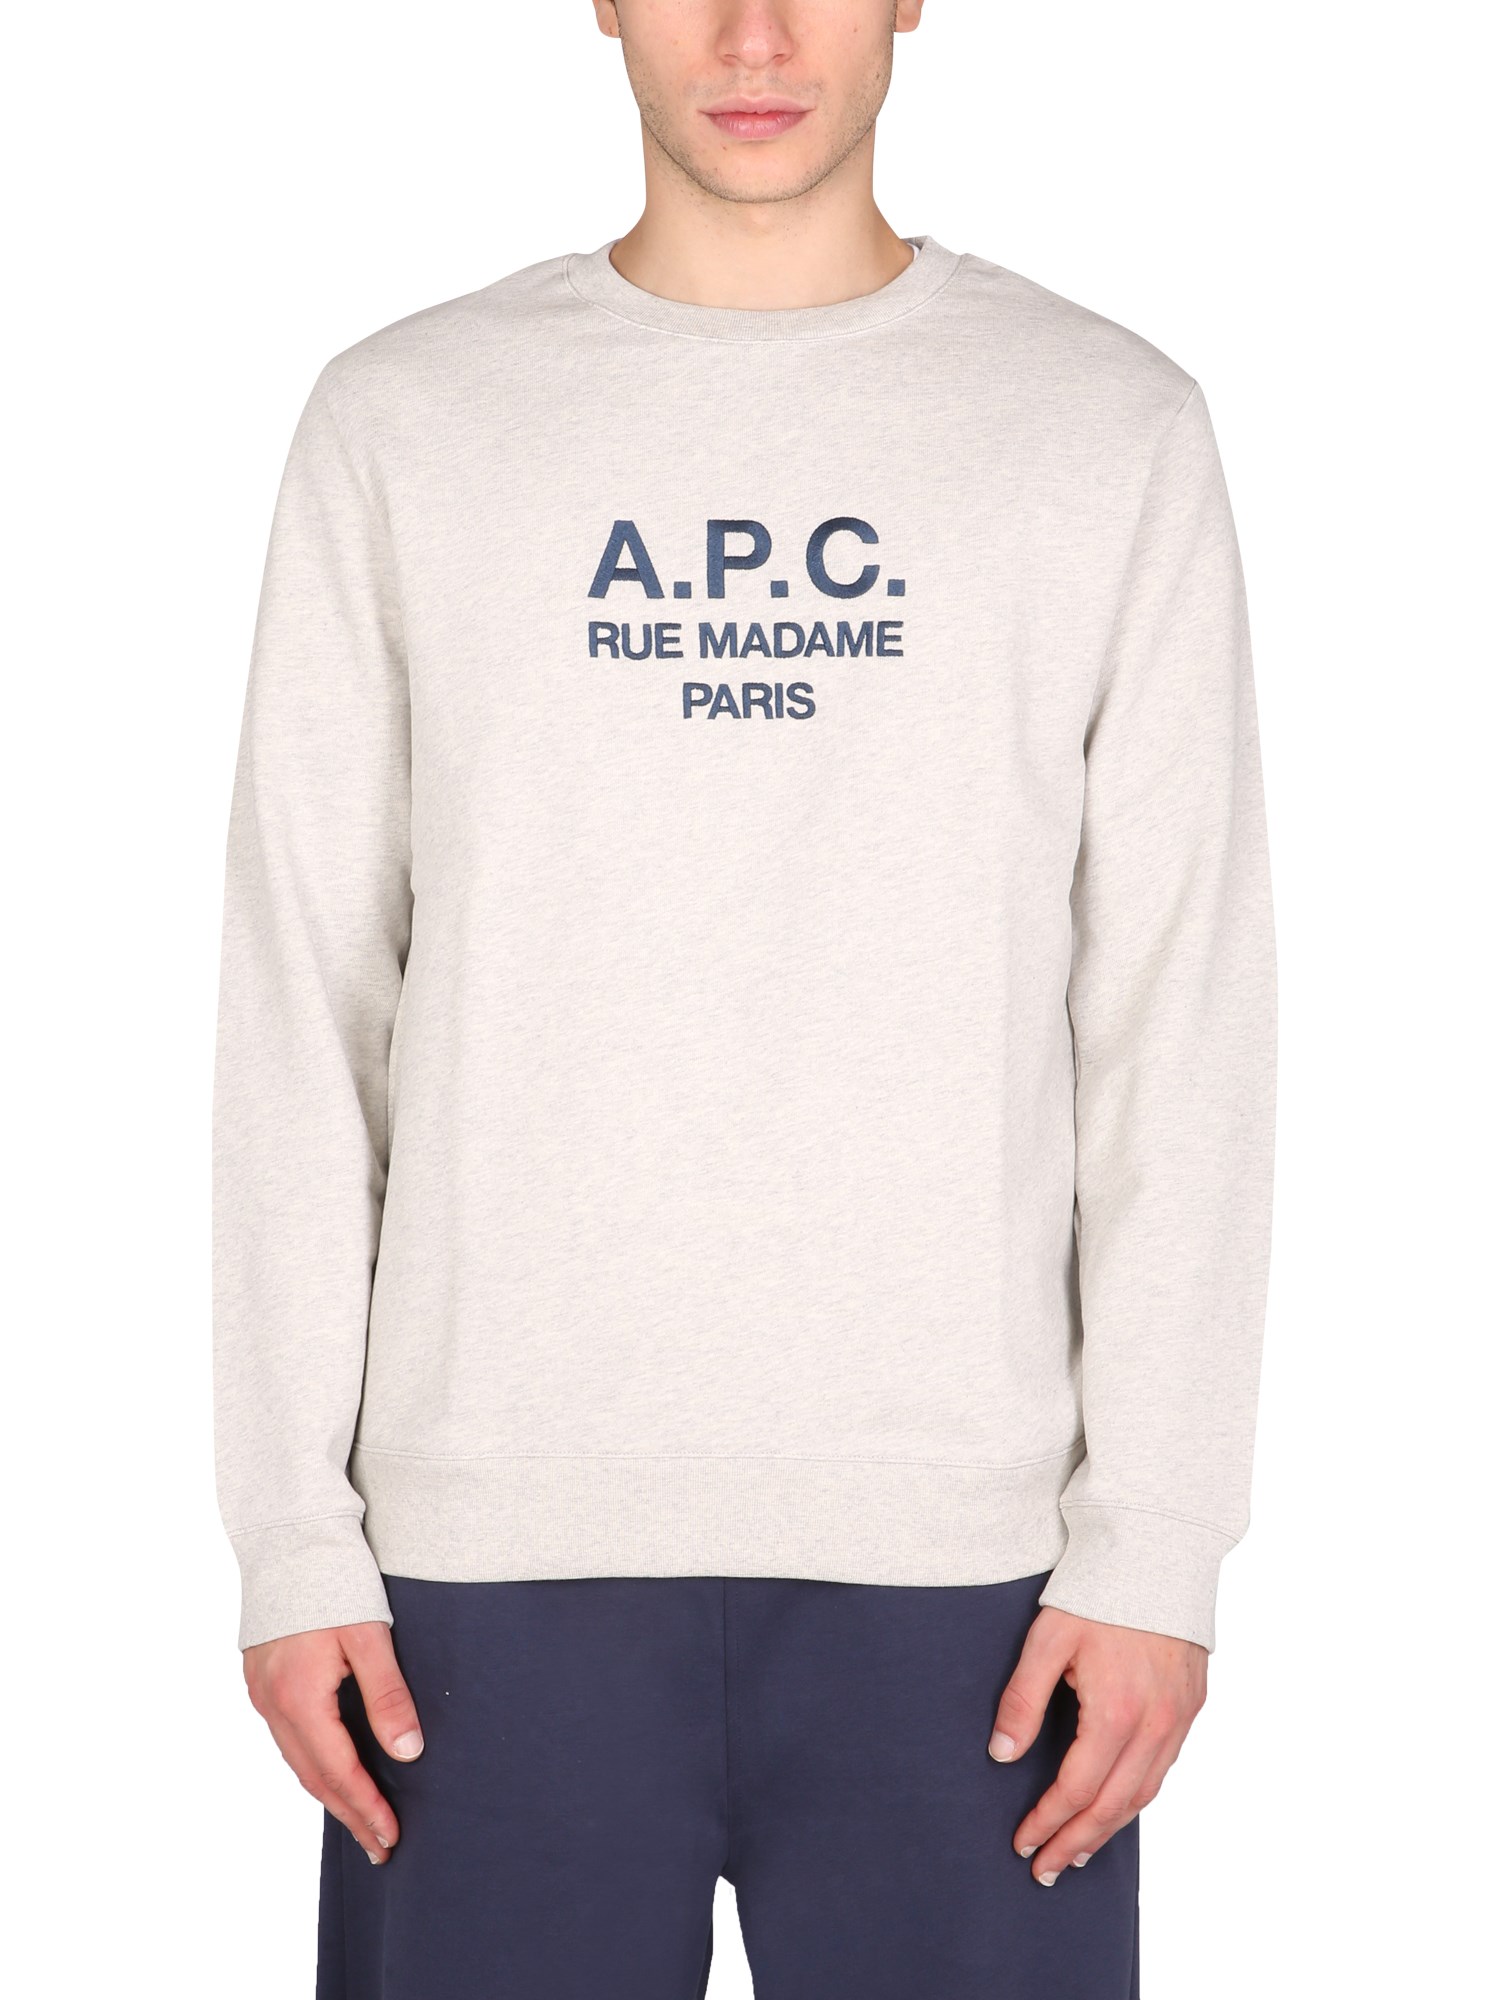 a.p.c. crew neck sweatshirt